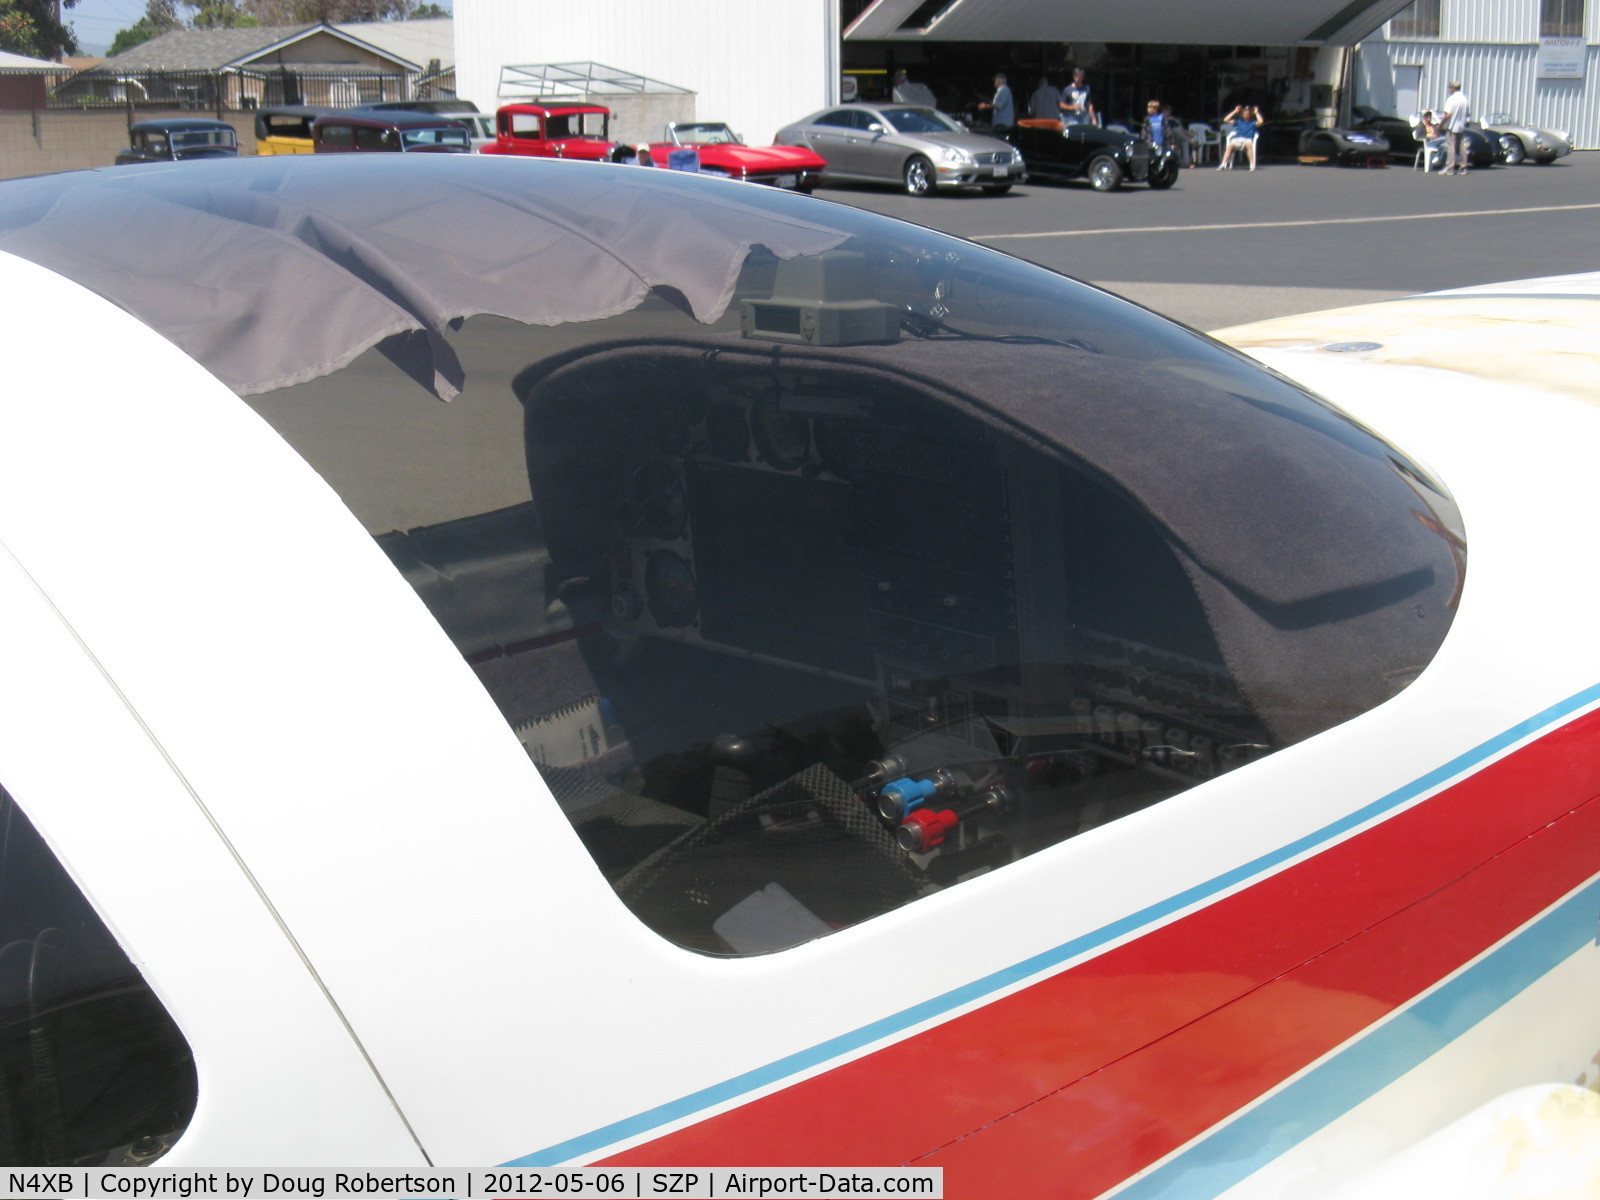 N4XB, 2000 Lancair 320/360 C/N 654FB, 2000 Hendrickson NORMAIR 3 (Lancair), Lycoming IO-360, panel